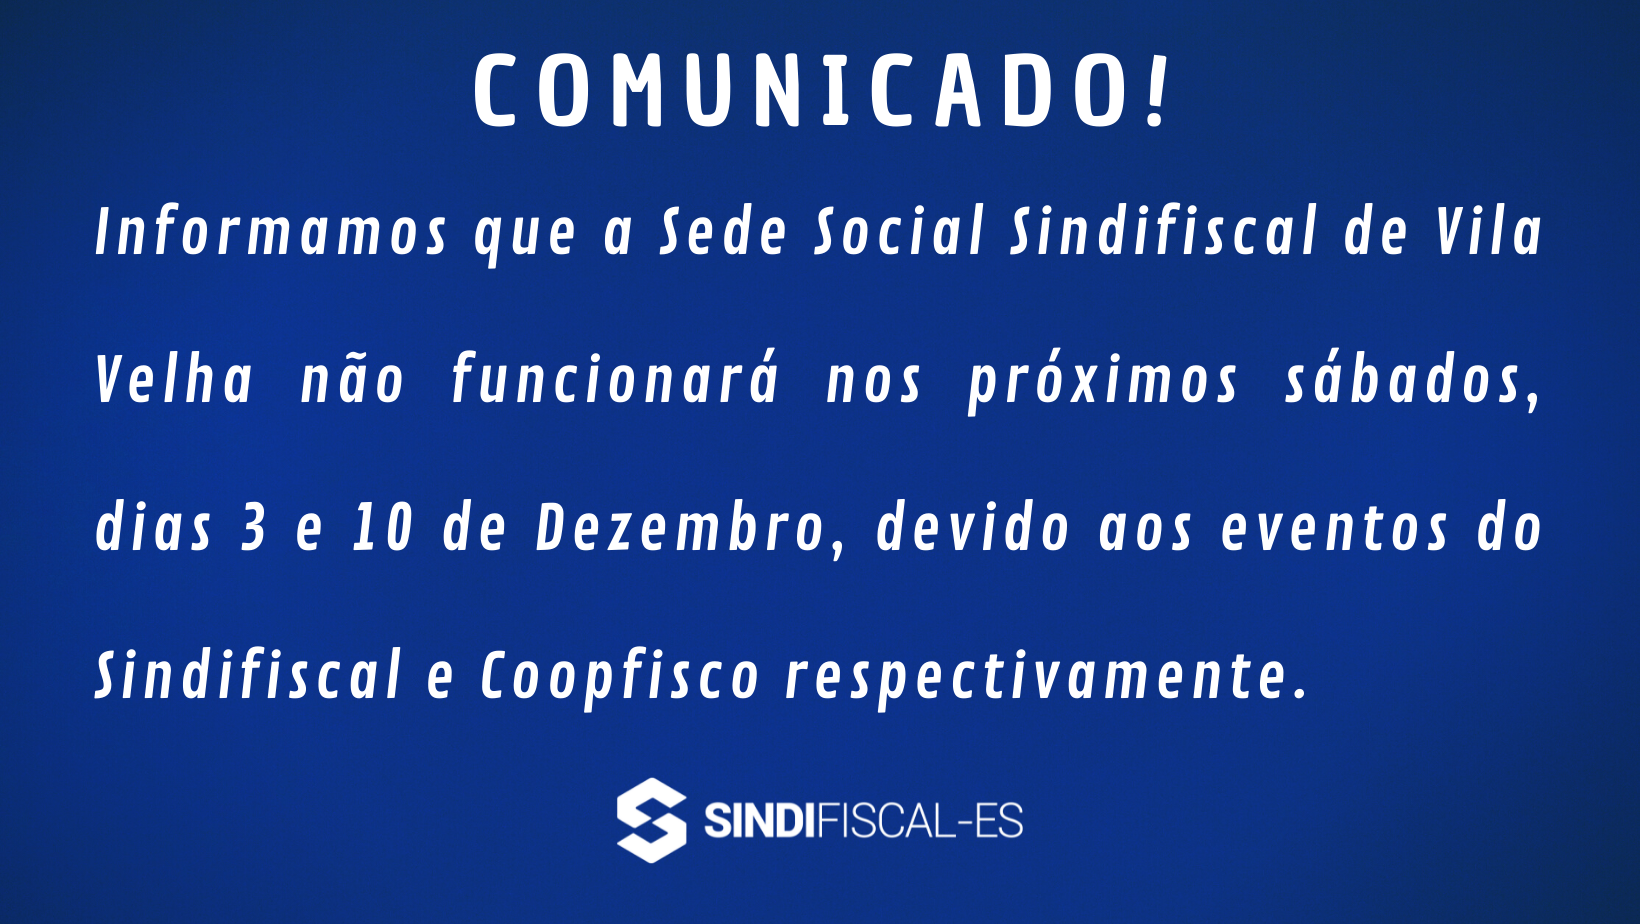 Sede Social de Vila Velha estará fechada ao público nos dias 3 e 10 de dezembro